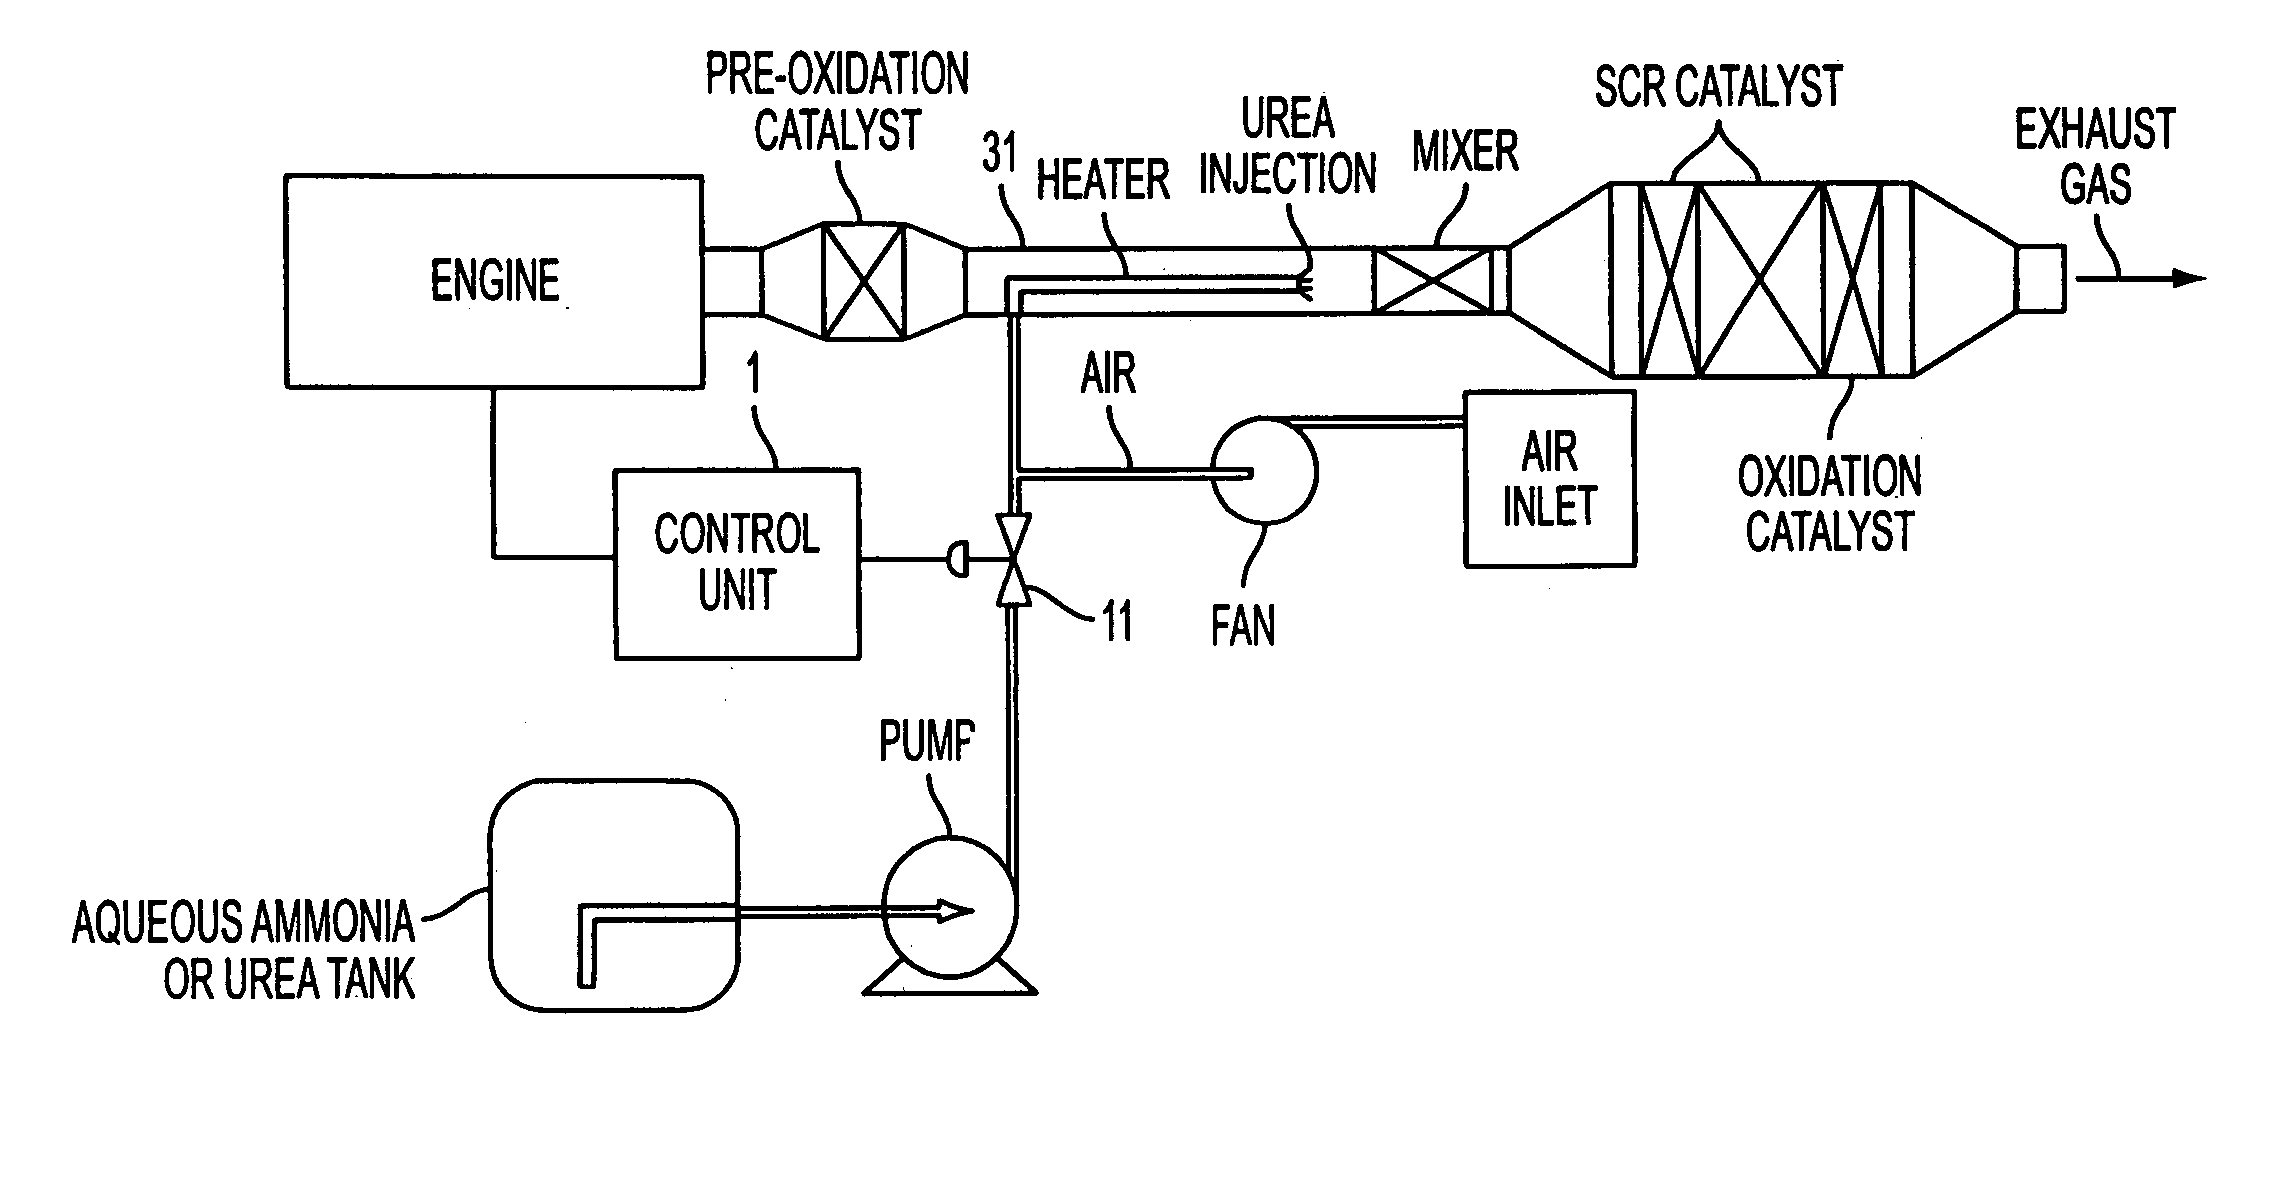 Emission control system